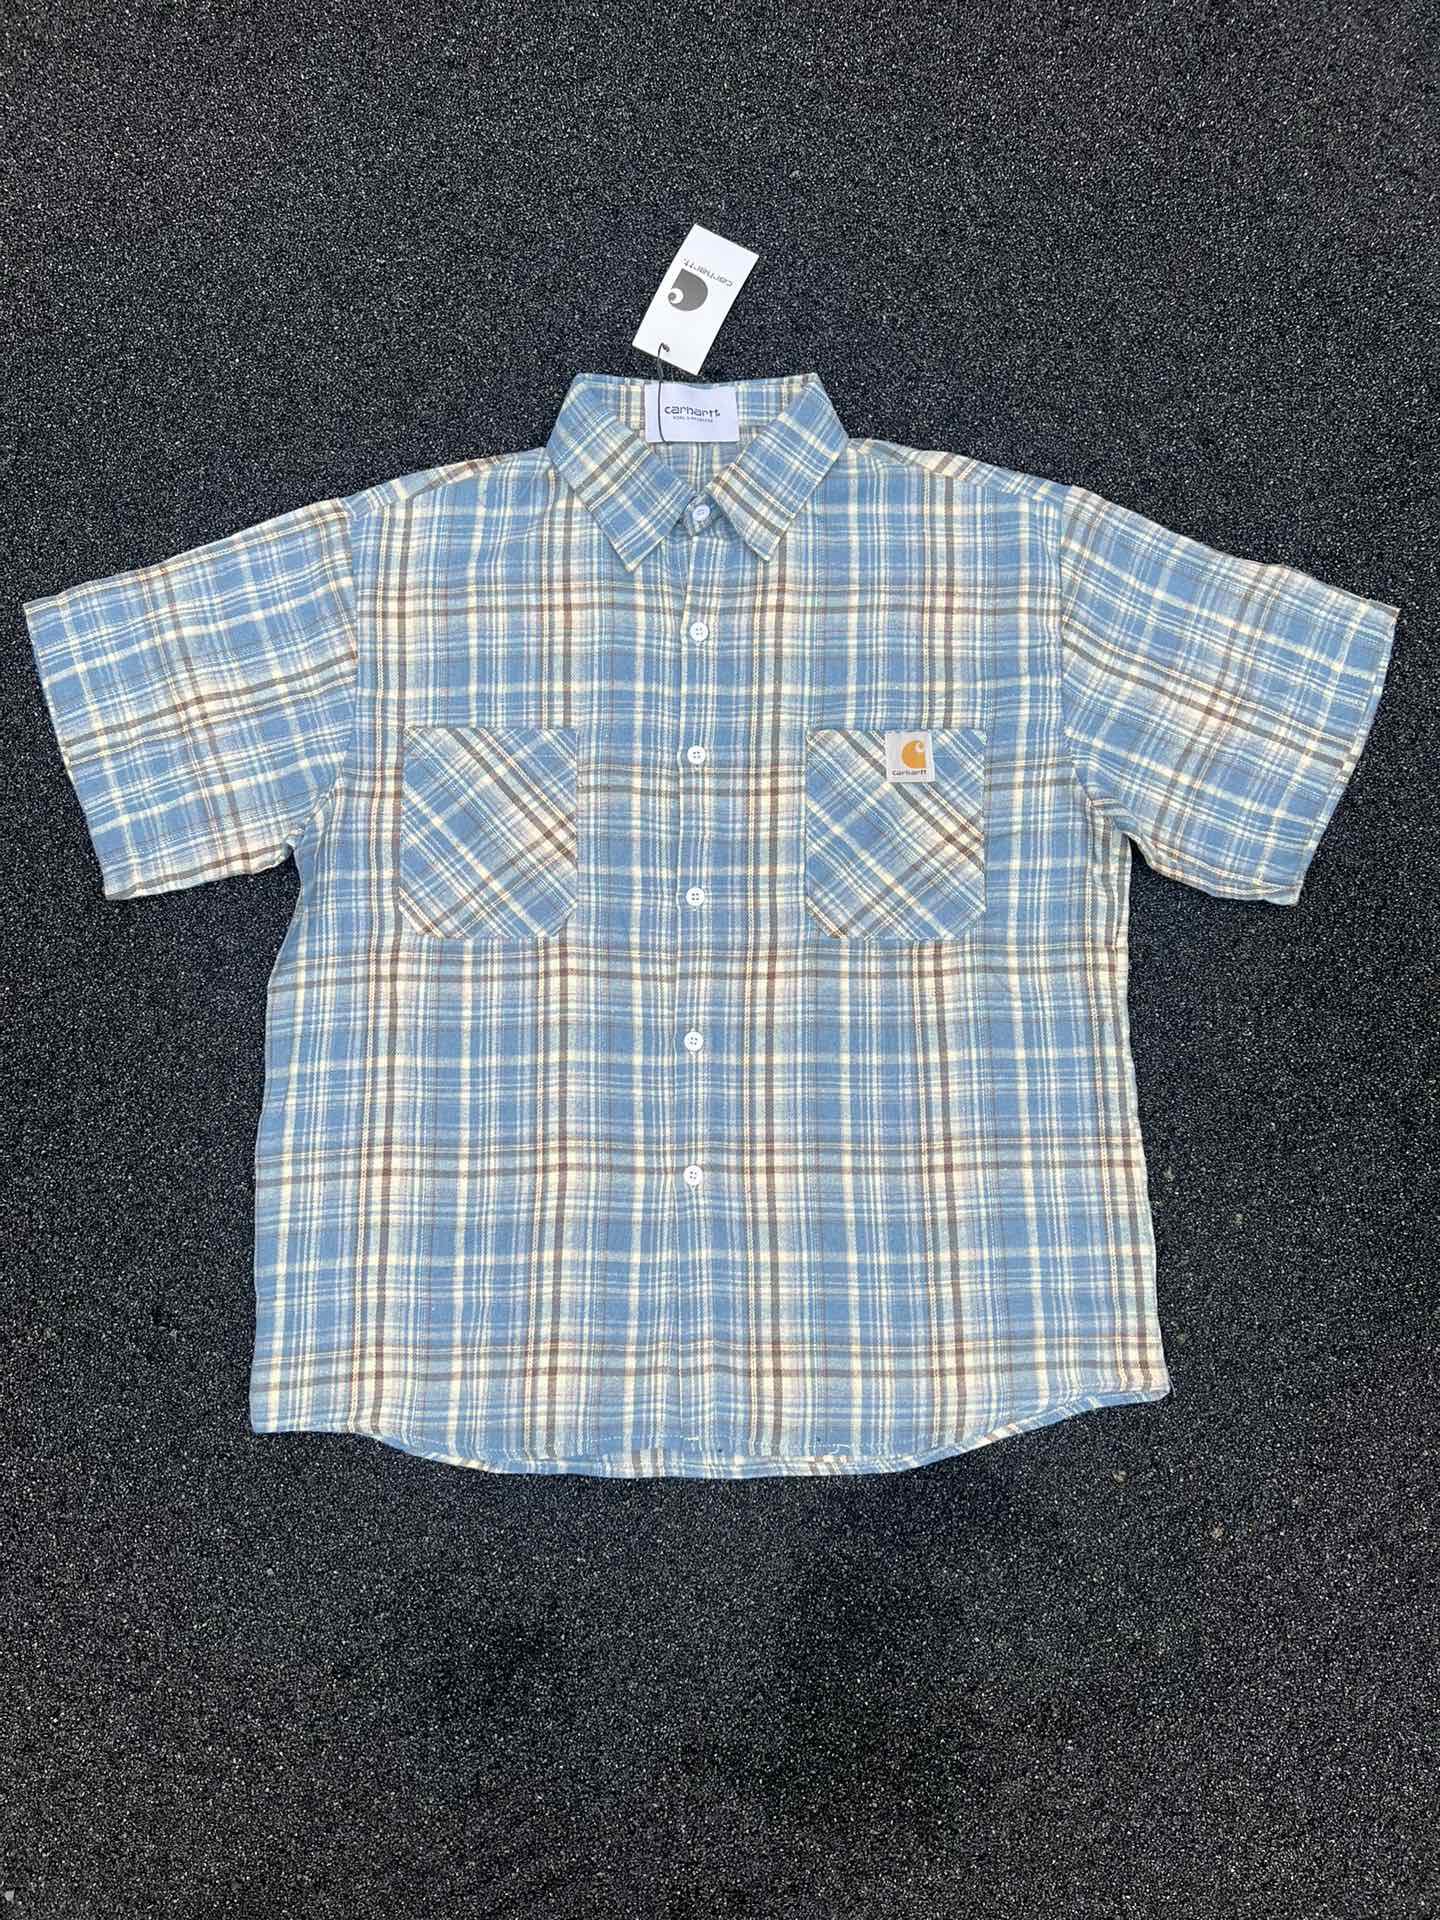 Carhartt Clothing Shirts & Blouses T-Shirt Blue Unisex Cotton Short Sleeve